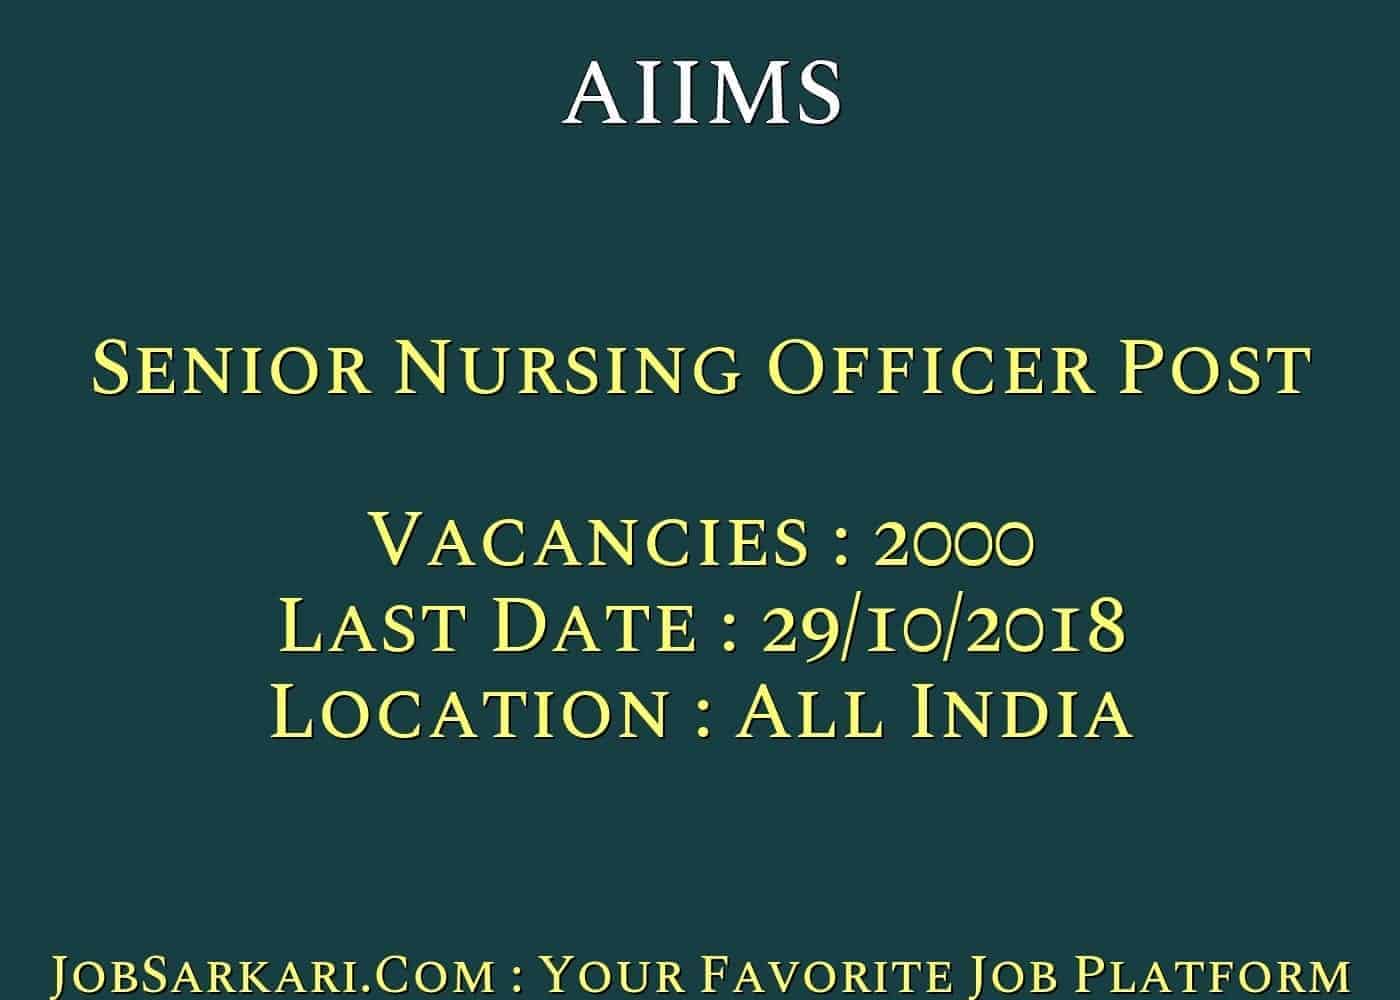 AIIMS Staff Nurse Recruitment 2018 for Nursing Officer Post